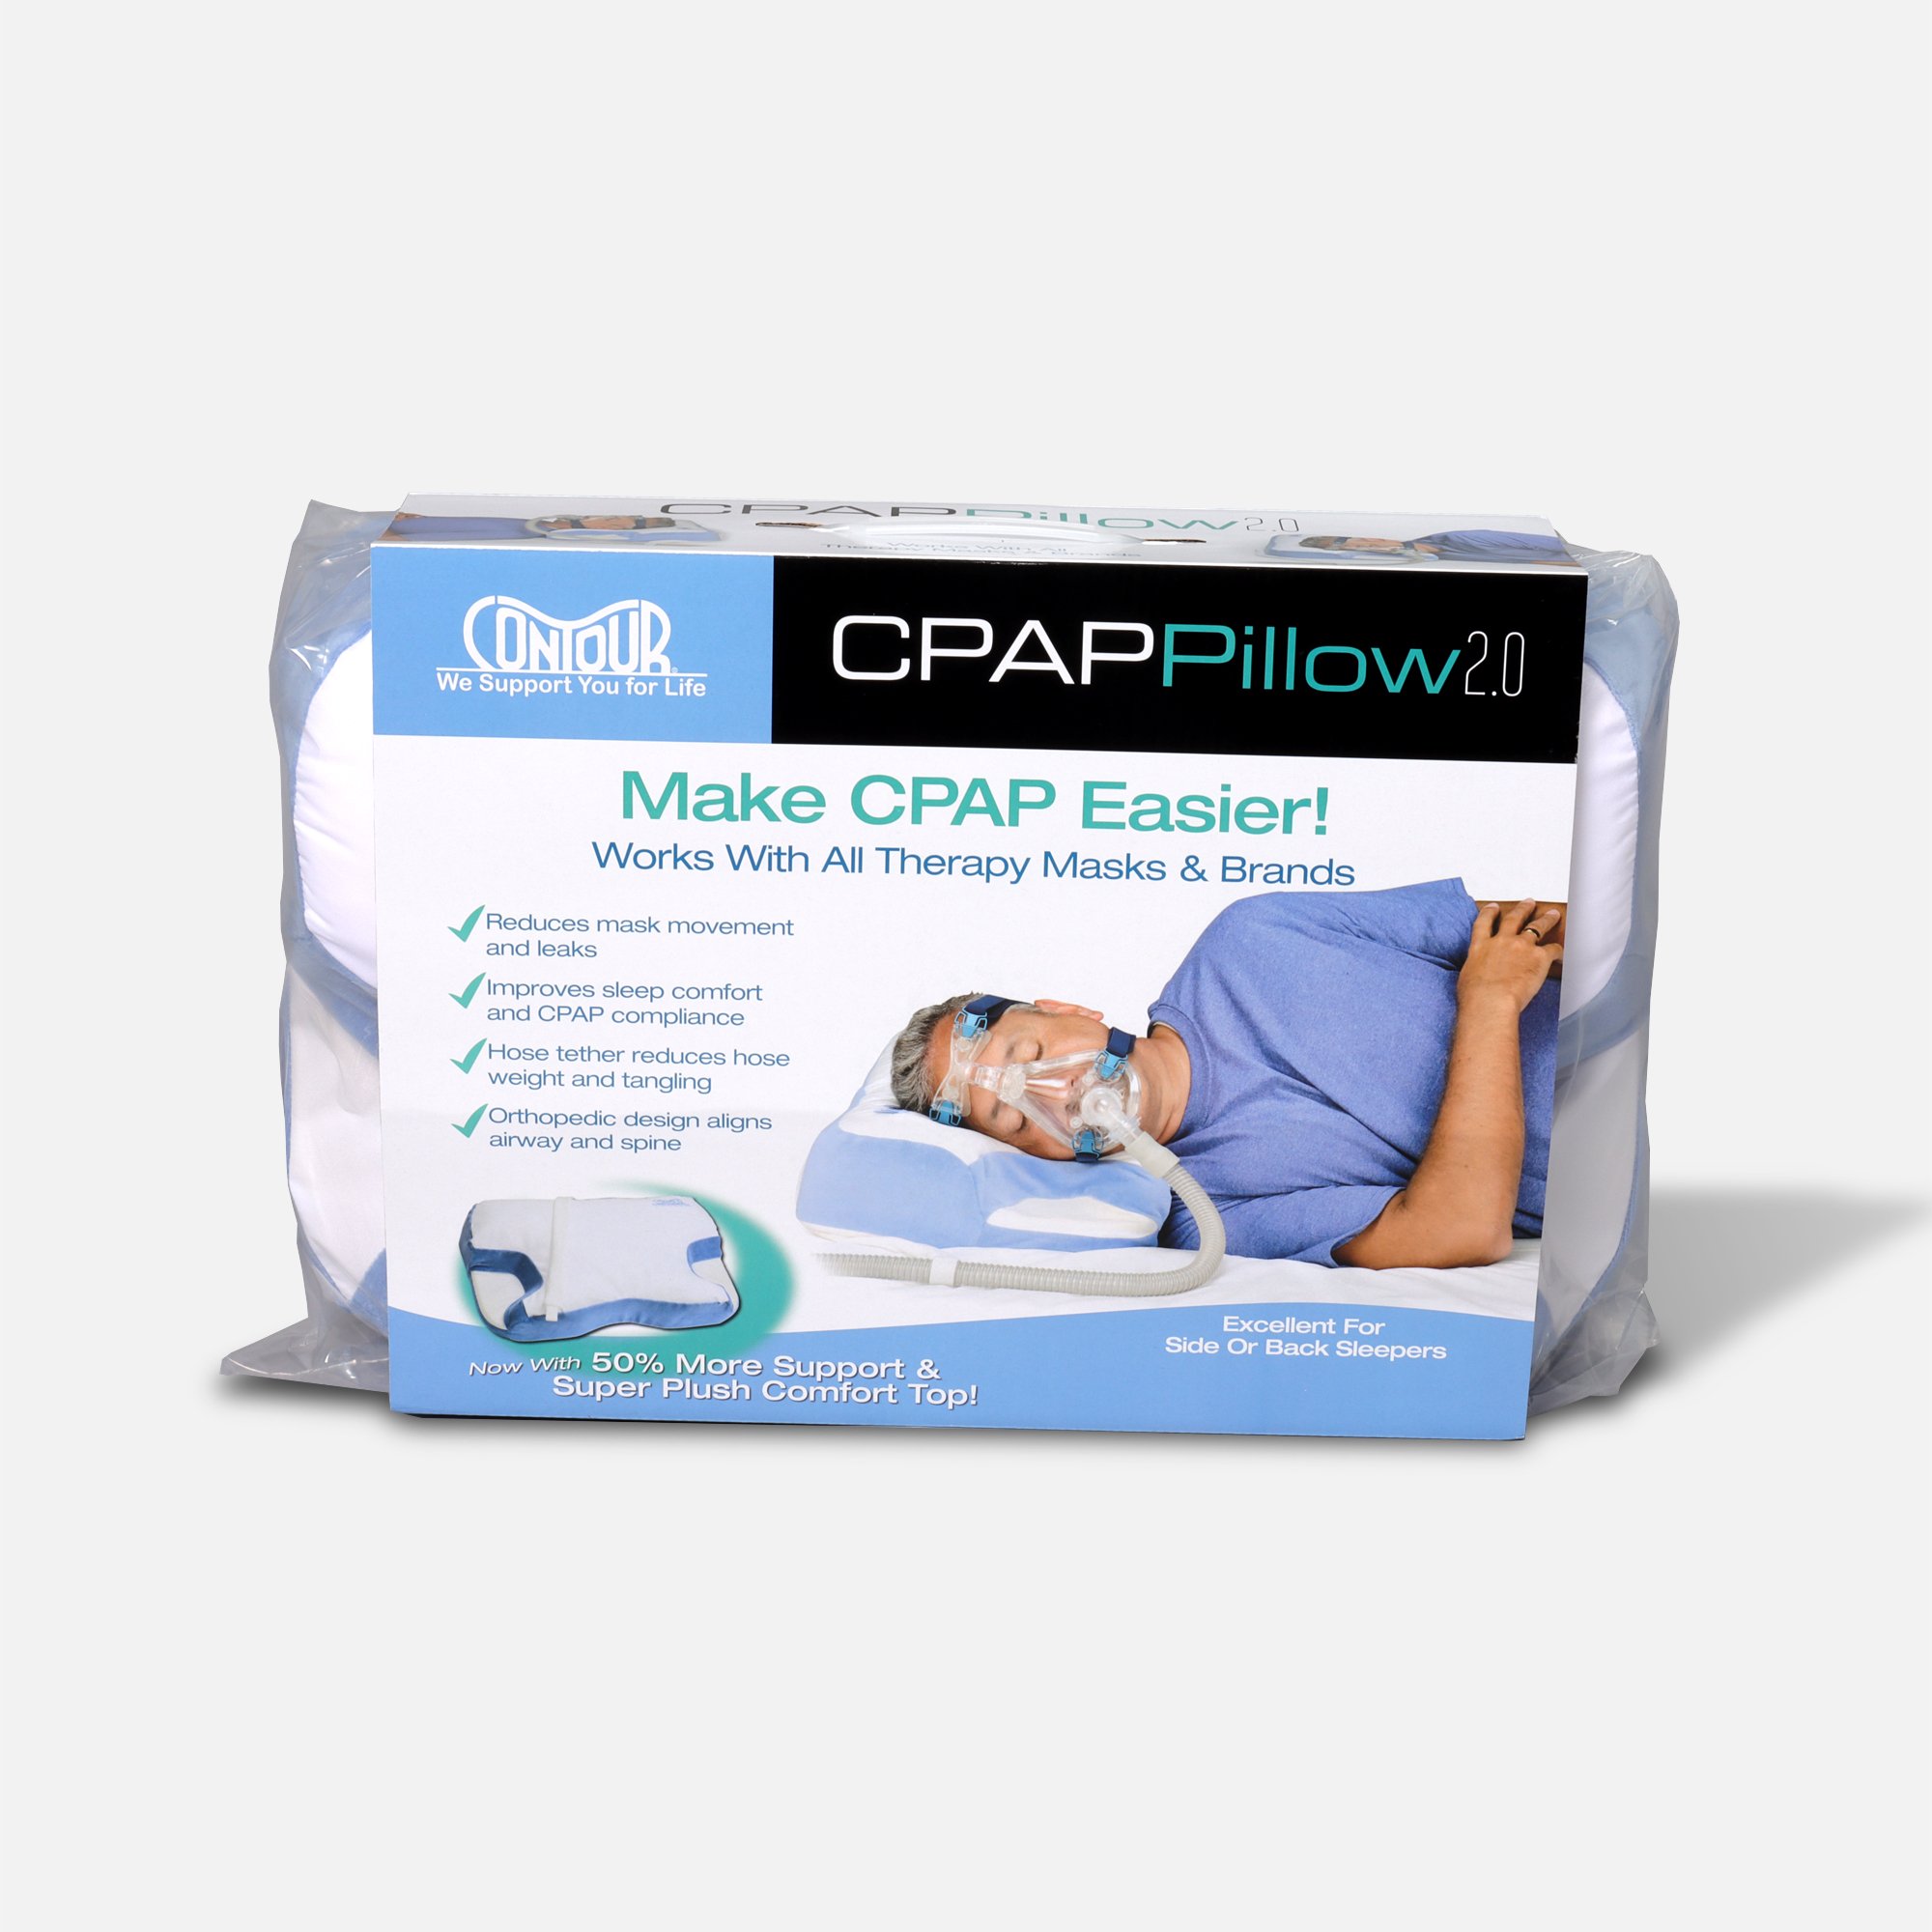 Contour CPAP 2.0 Pillow